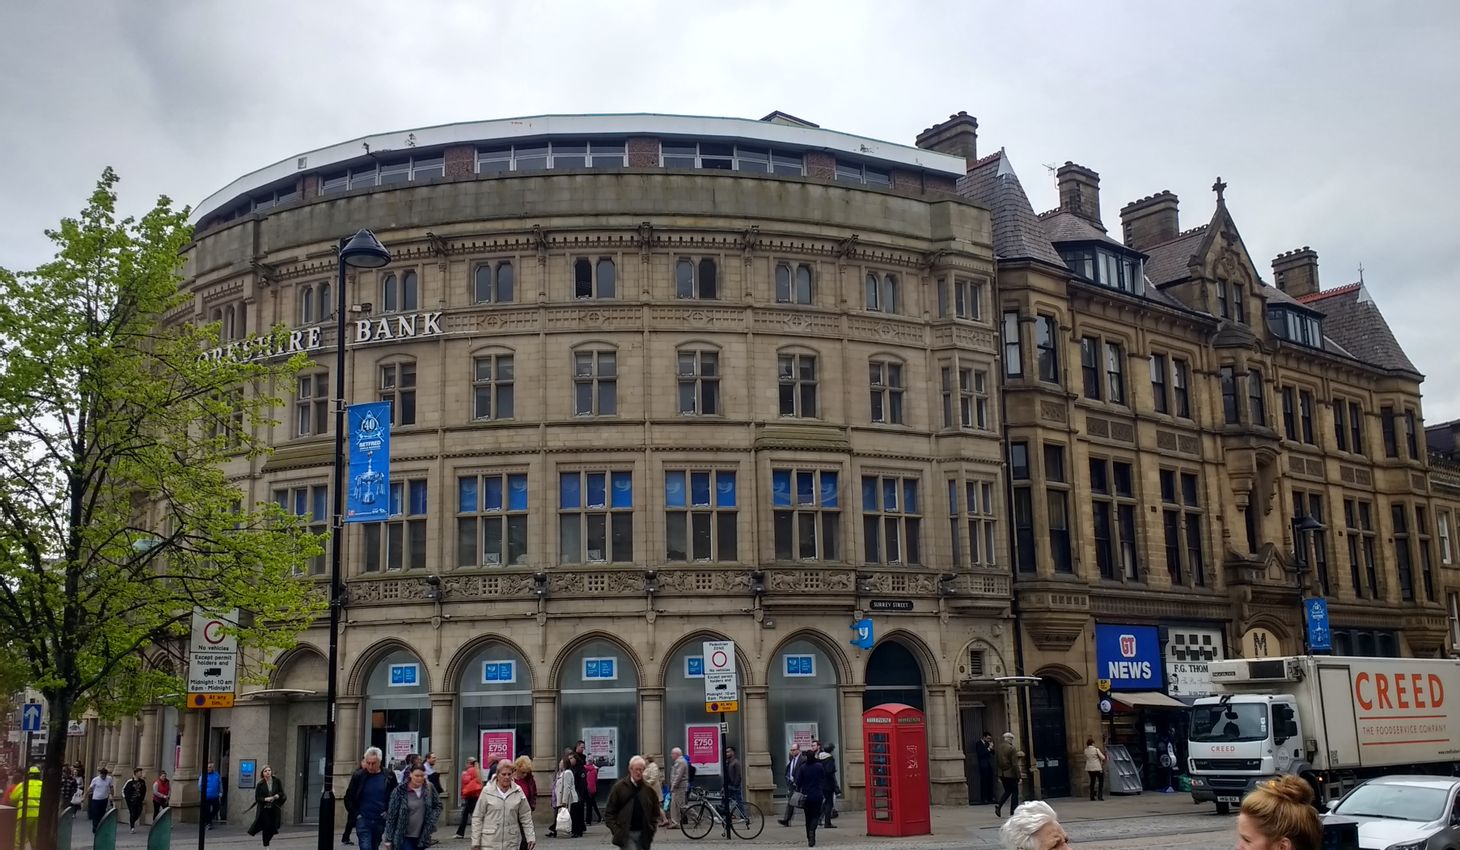 Yorkshire Bank Chambers, Fargate, Sheffield, S1 2HD